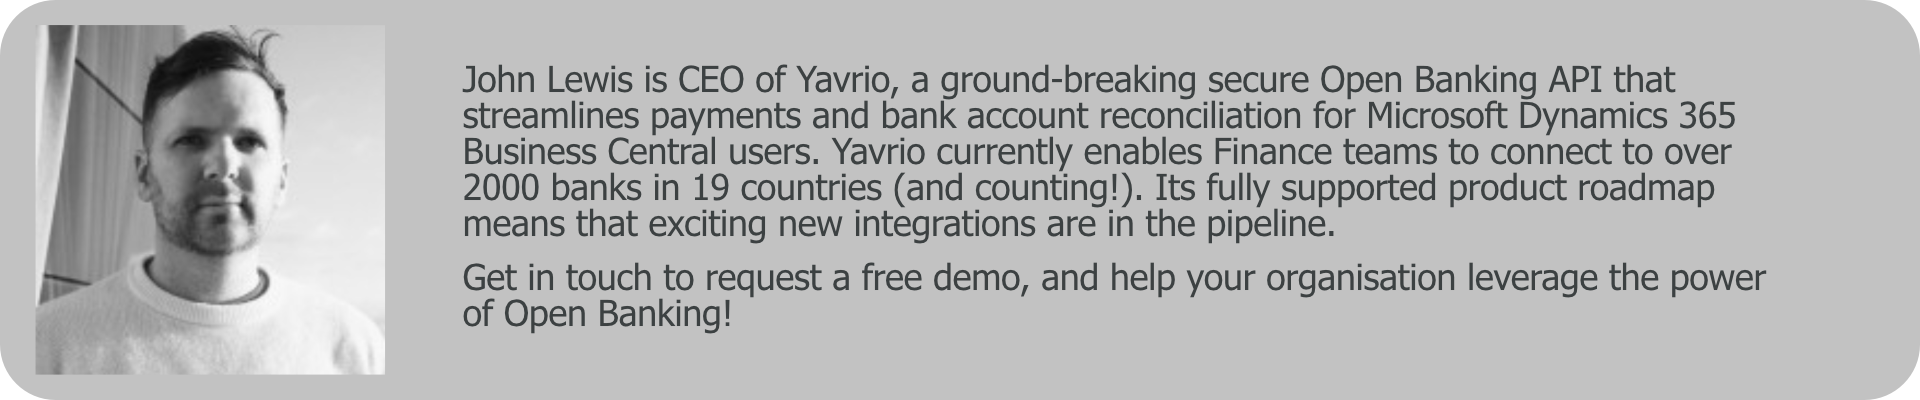 Short bio of John Lewis CEO of Yavrio Open Banking